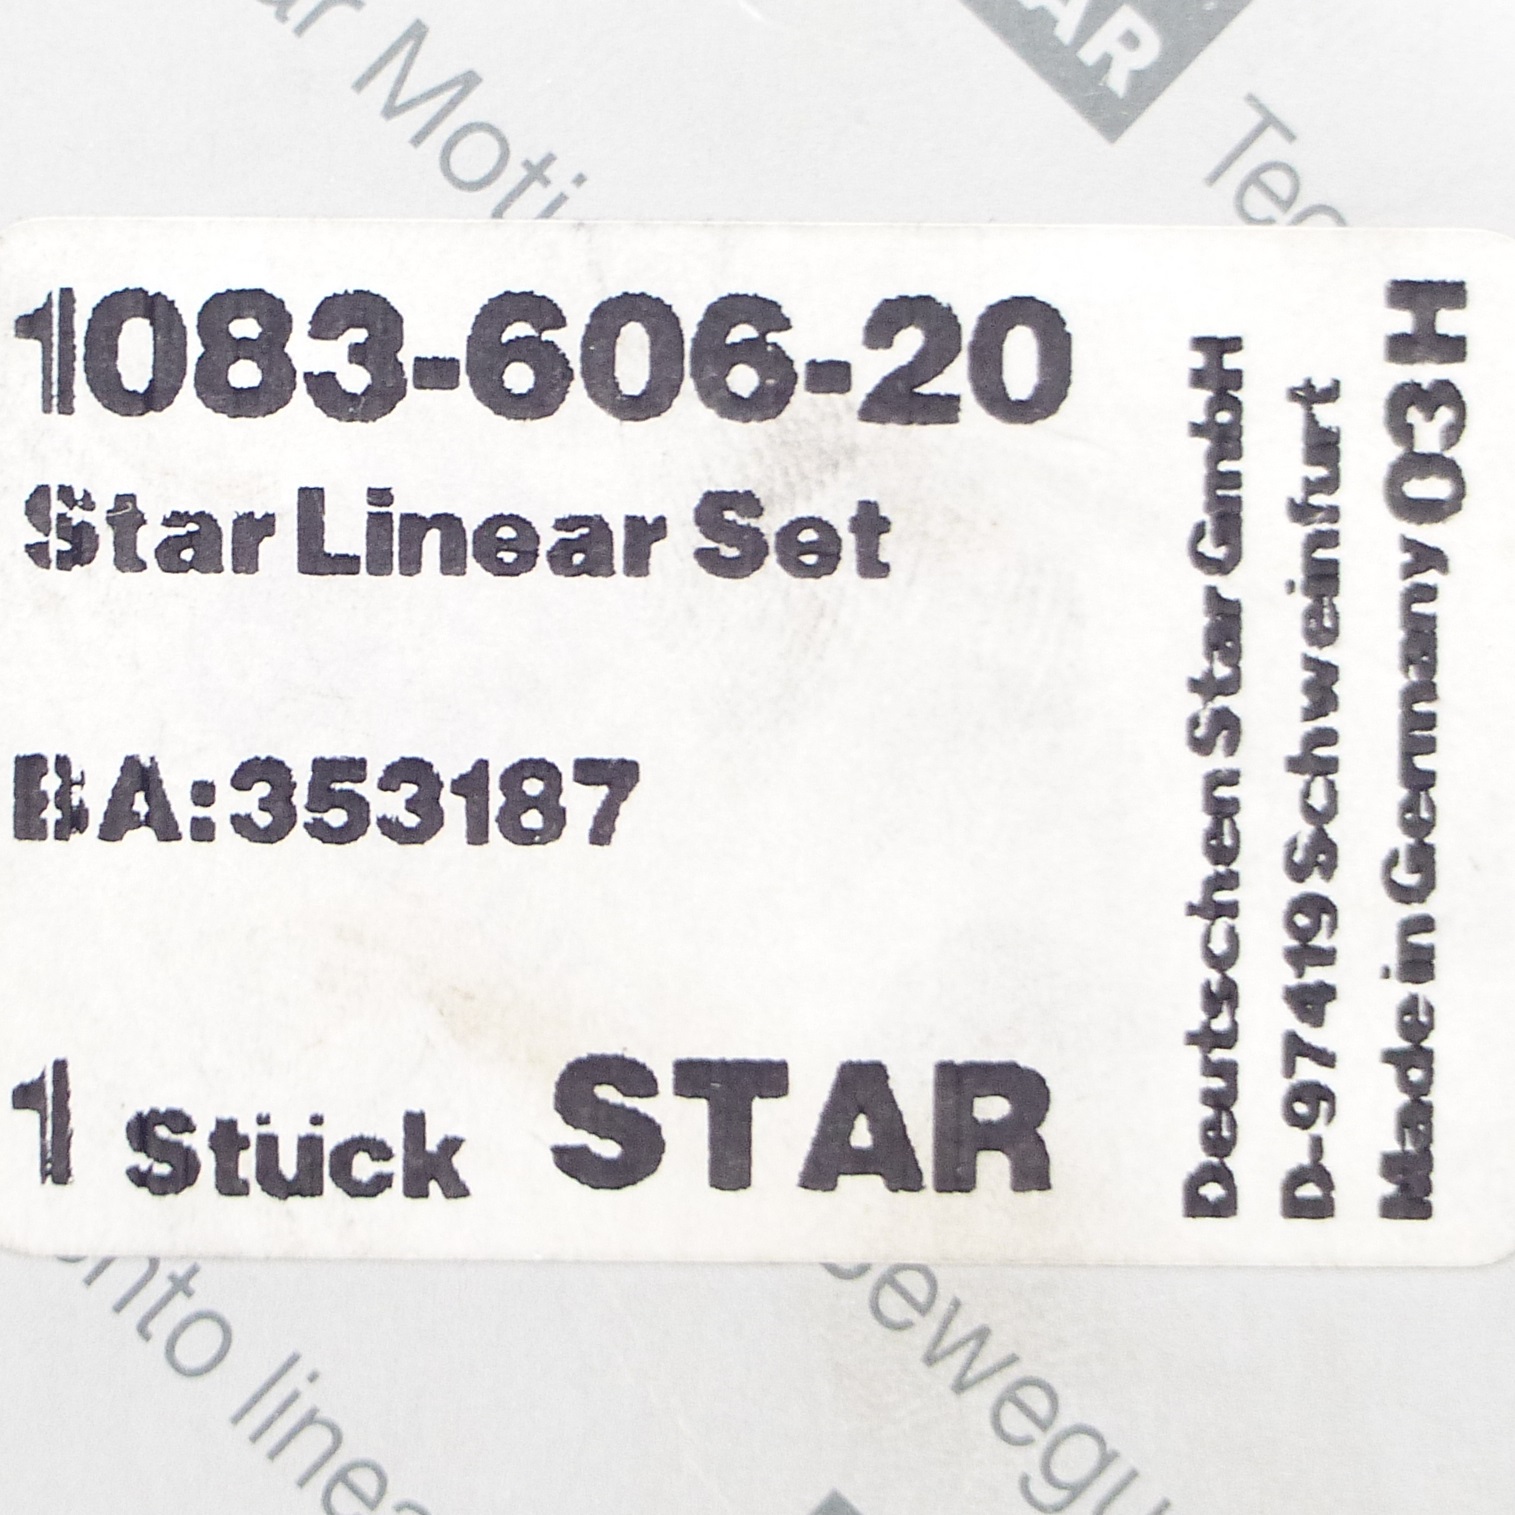 Star Linear Set BA: 353187 